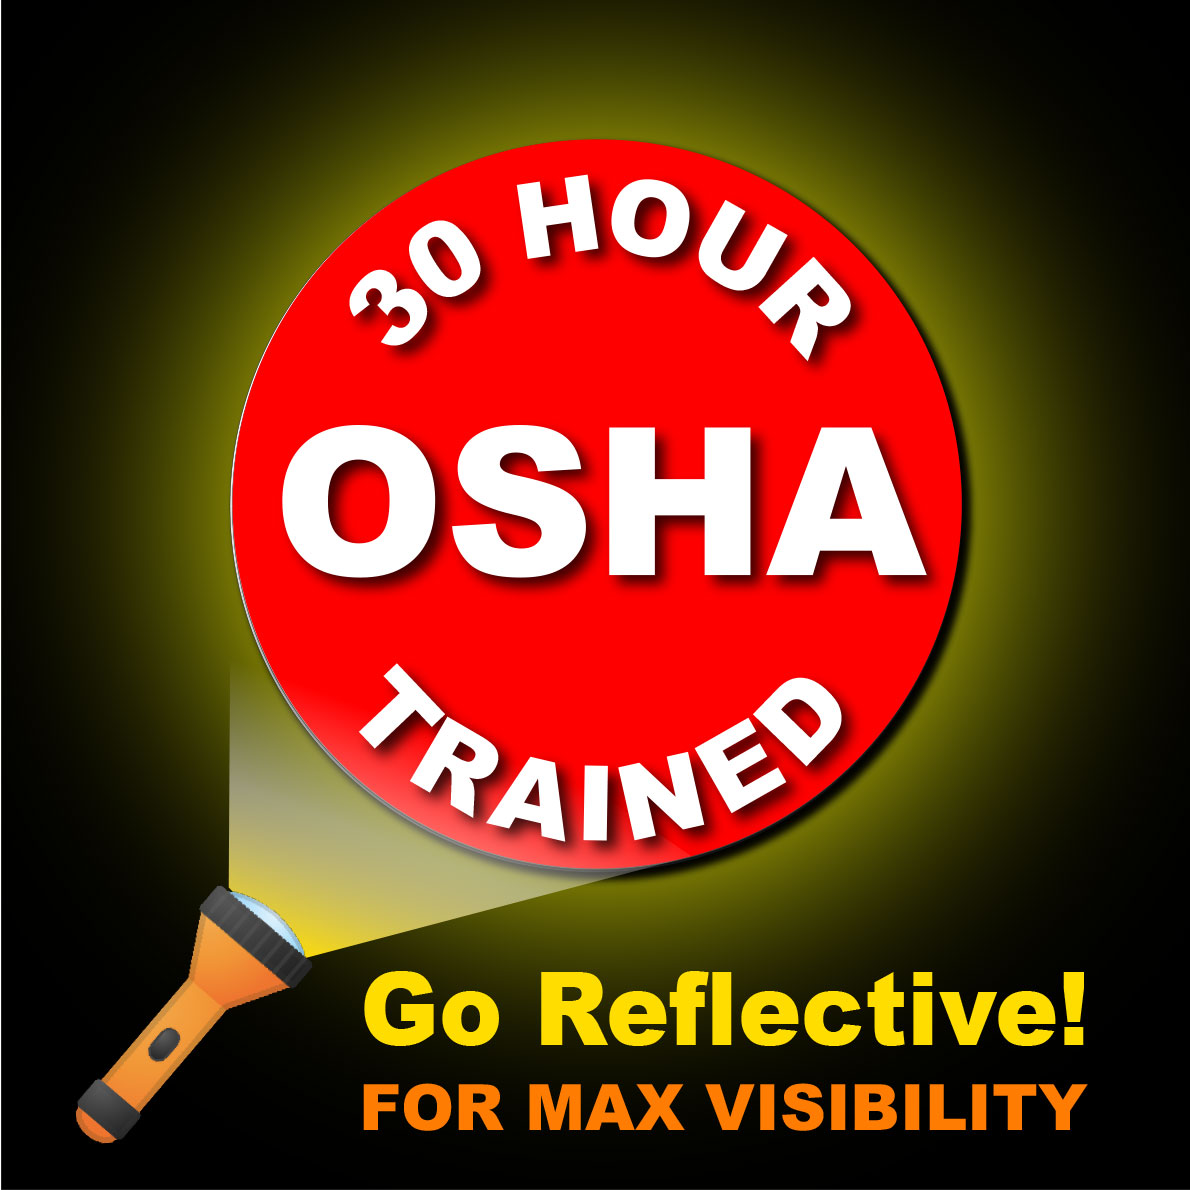 30 Hours OSHA Trained Hard Hat Sticker